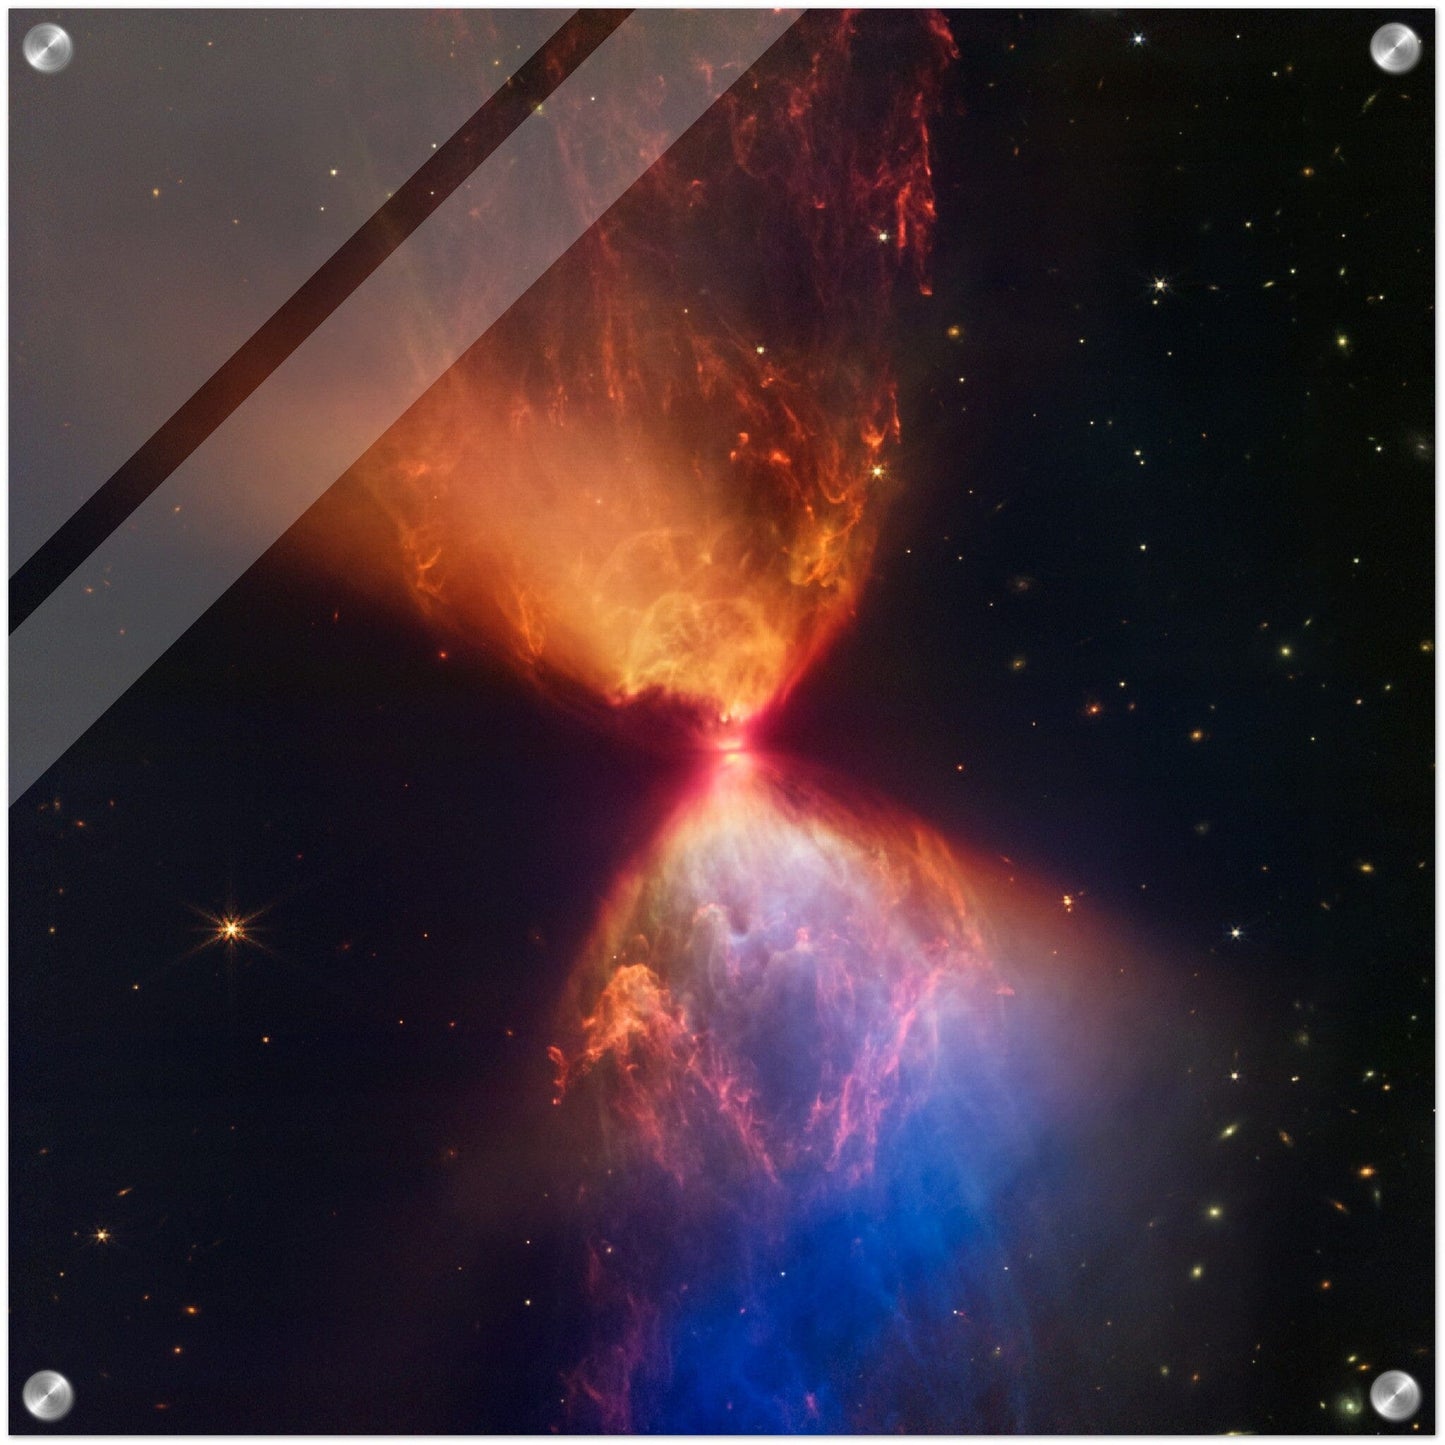 NASA - Poster - Acrylic - 11. L1527 and Protostar (NIRCam Image) - James Webb Space Telescope Acrylic Print TP Aviation Art 50x50 cm / 20x20″ 